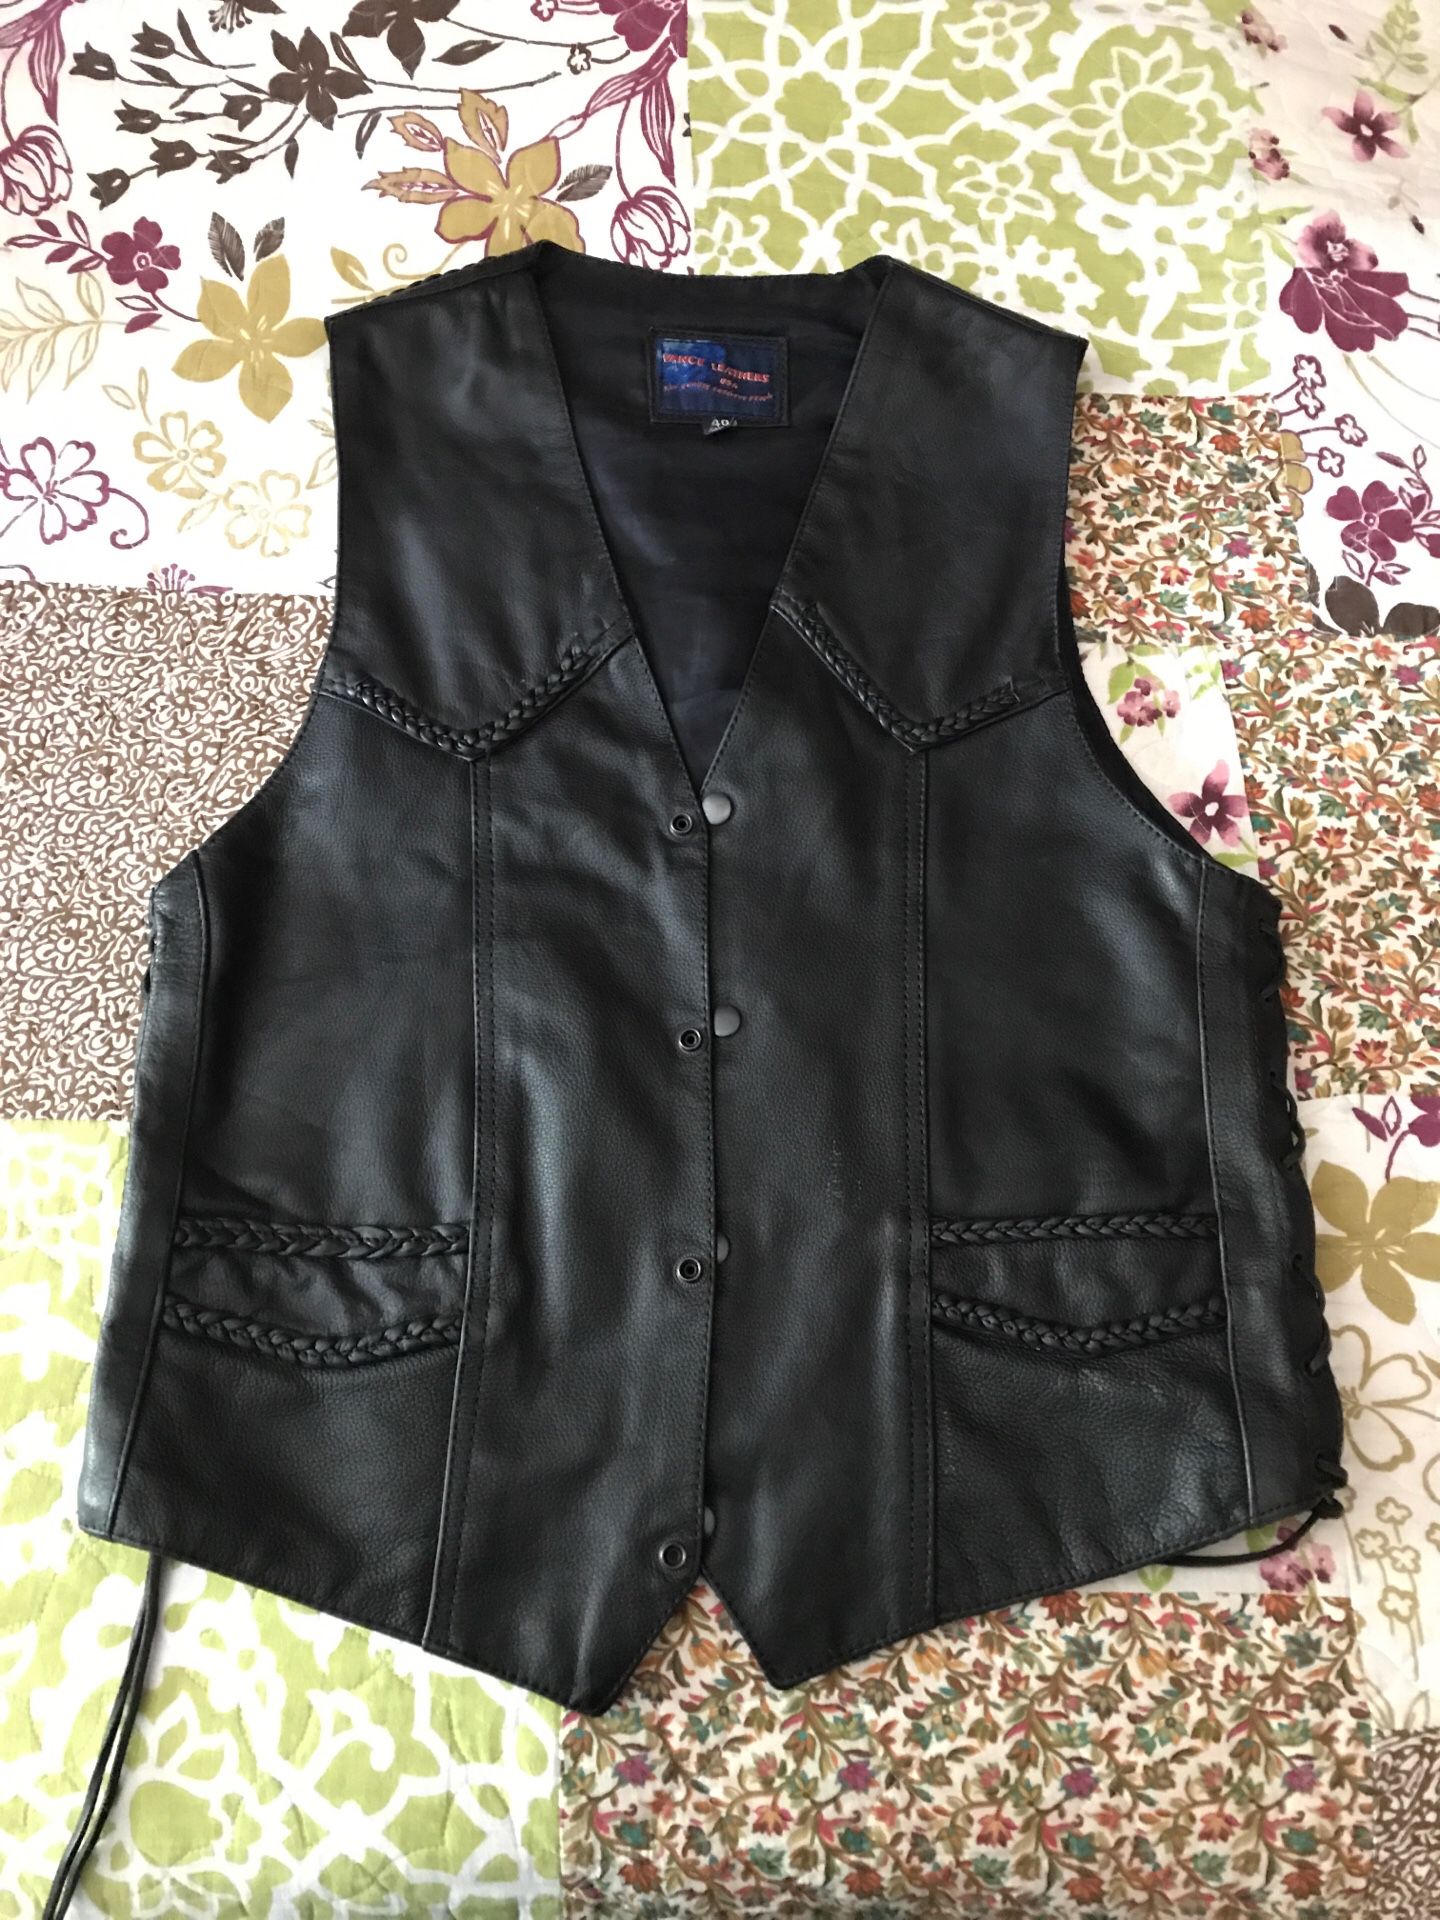 Women’s Leather Vest